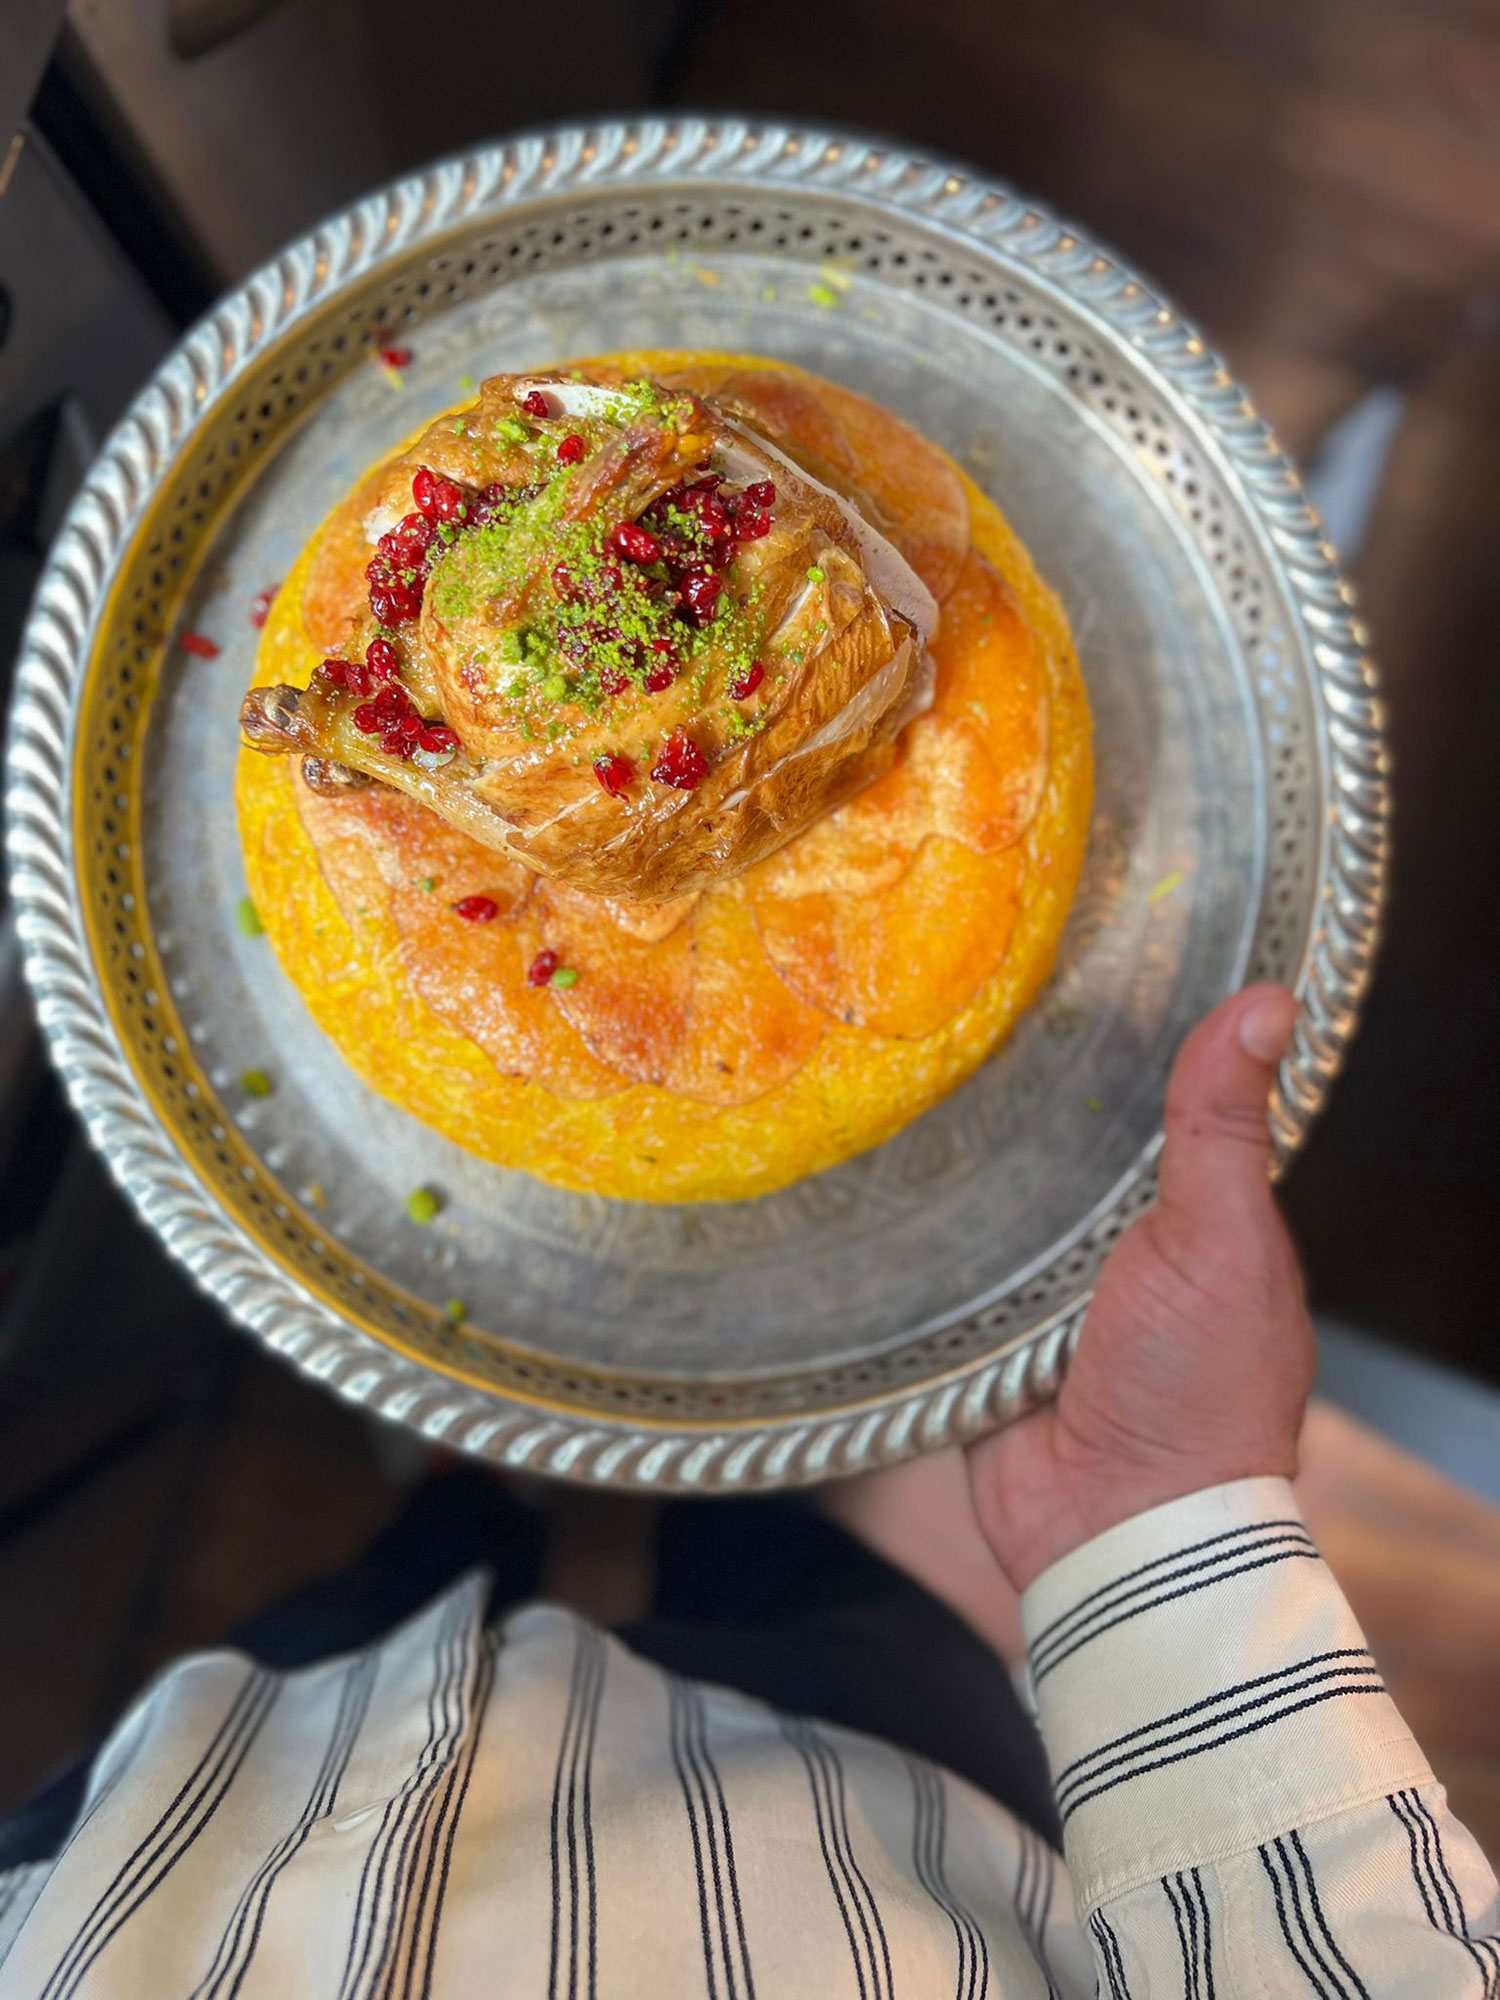 The main event of the Persian Feasting menu, Tahdig